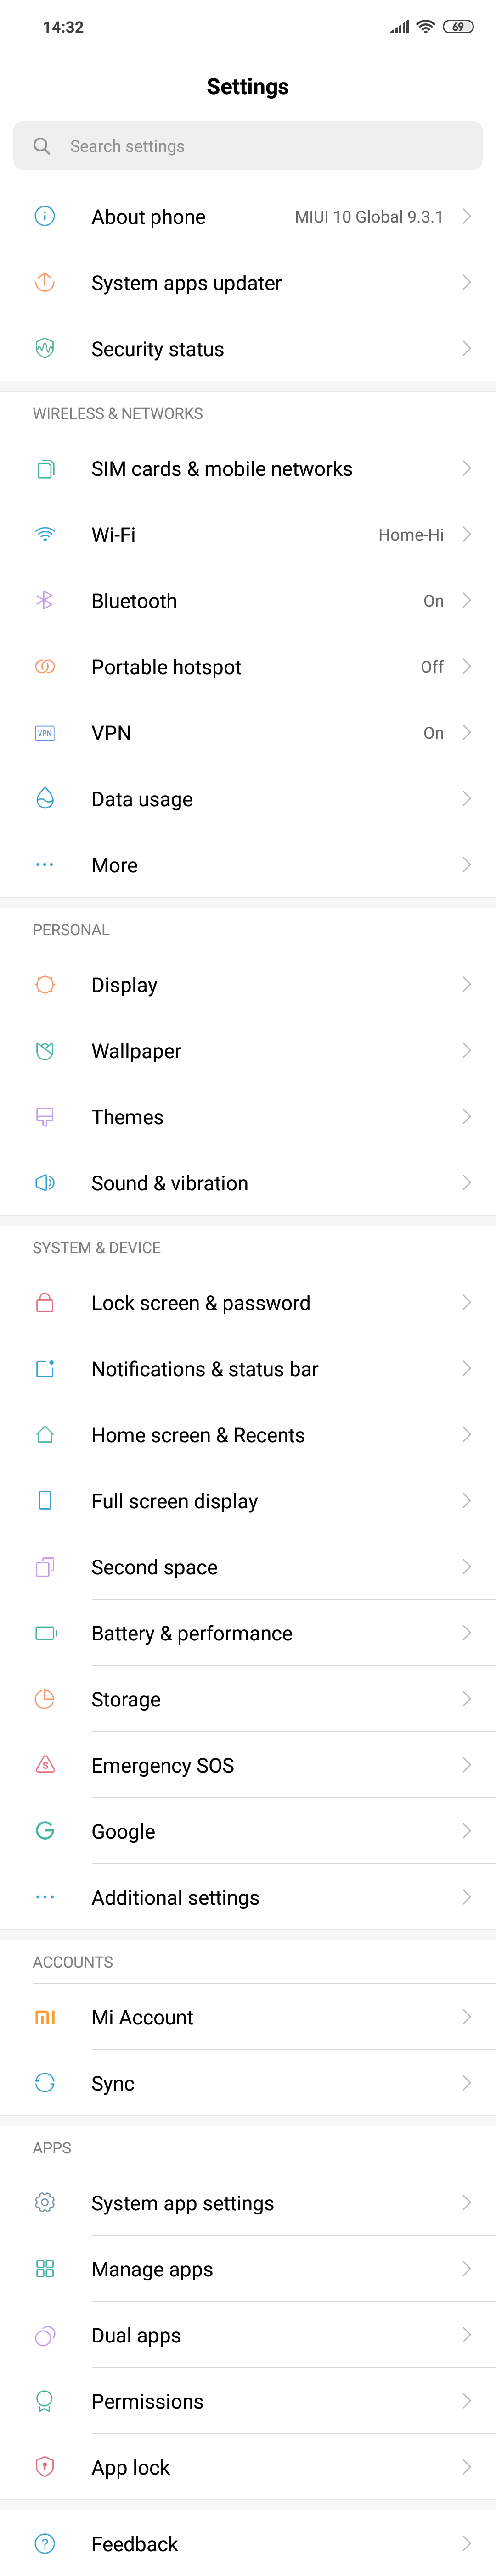 Screenshot_2019-03-01-14-32-20-218_com.android.settings.png